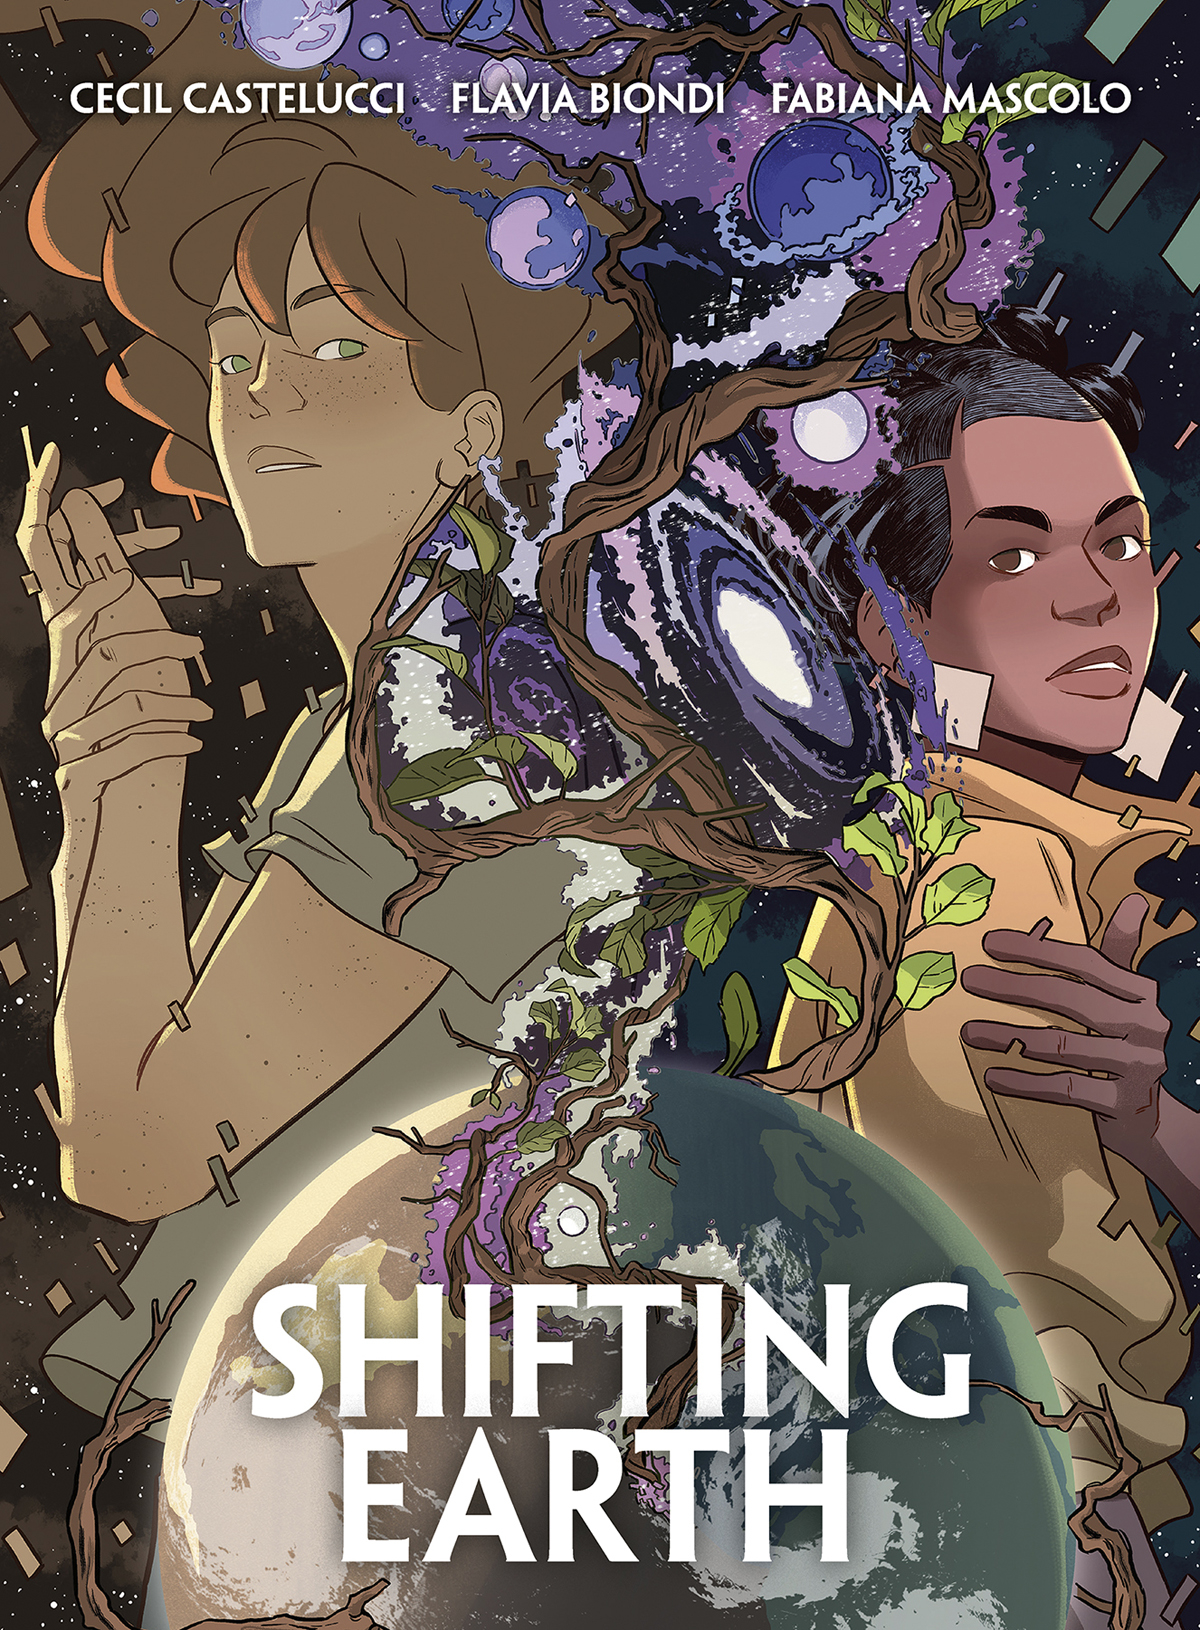 Shifting Earth Graphic Novel